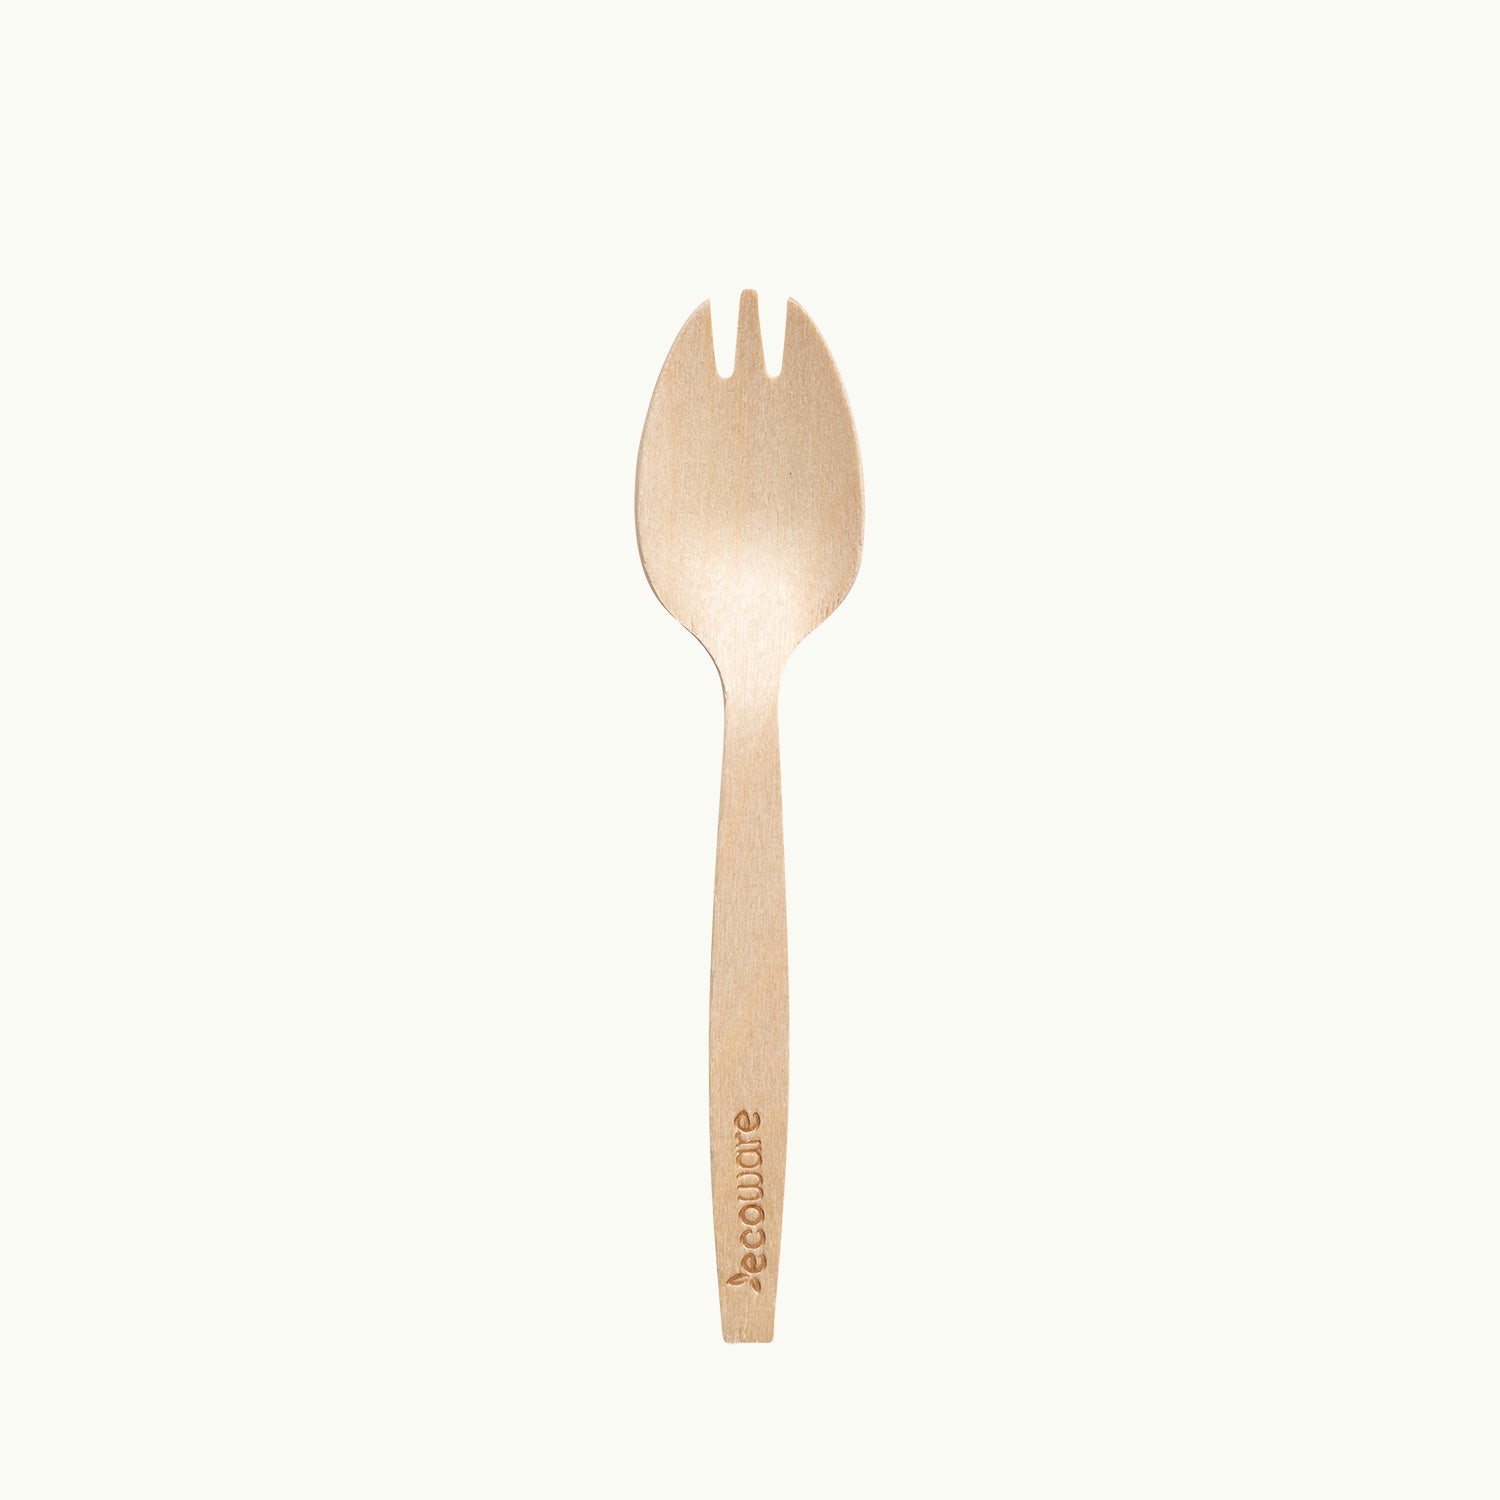 Certified compostable wooden cutlery spork.